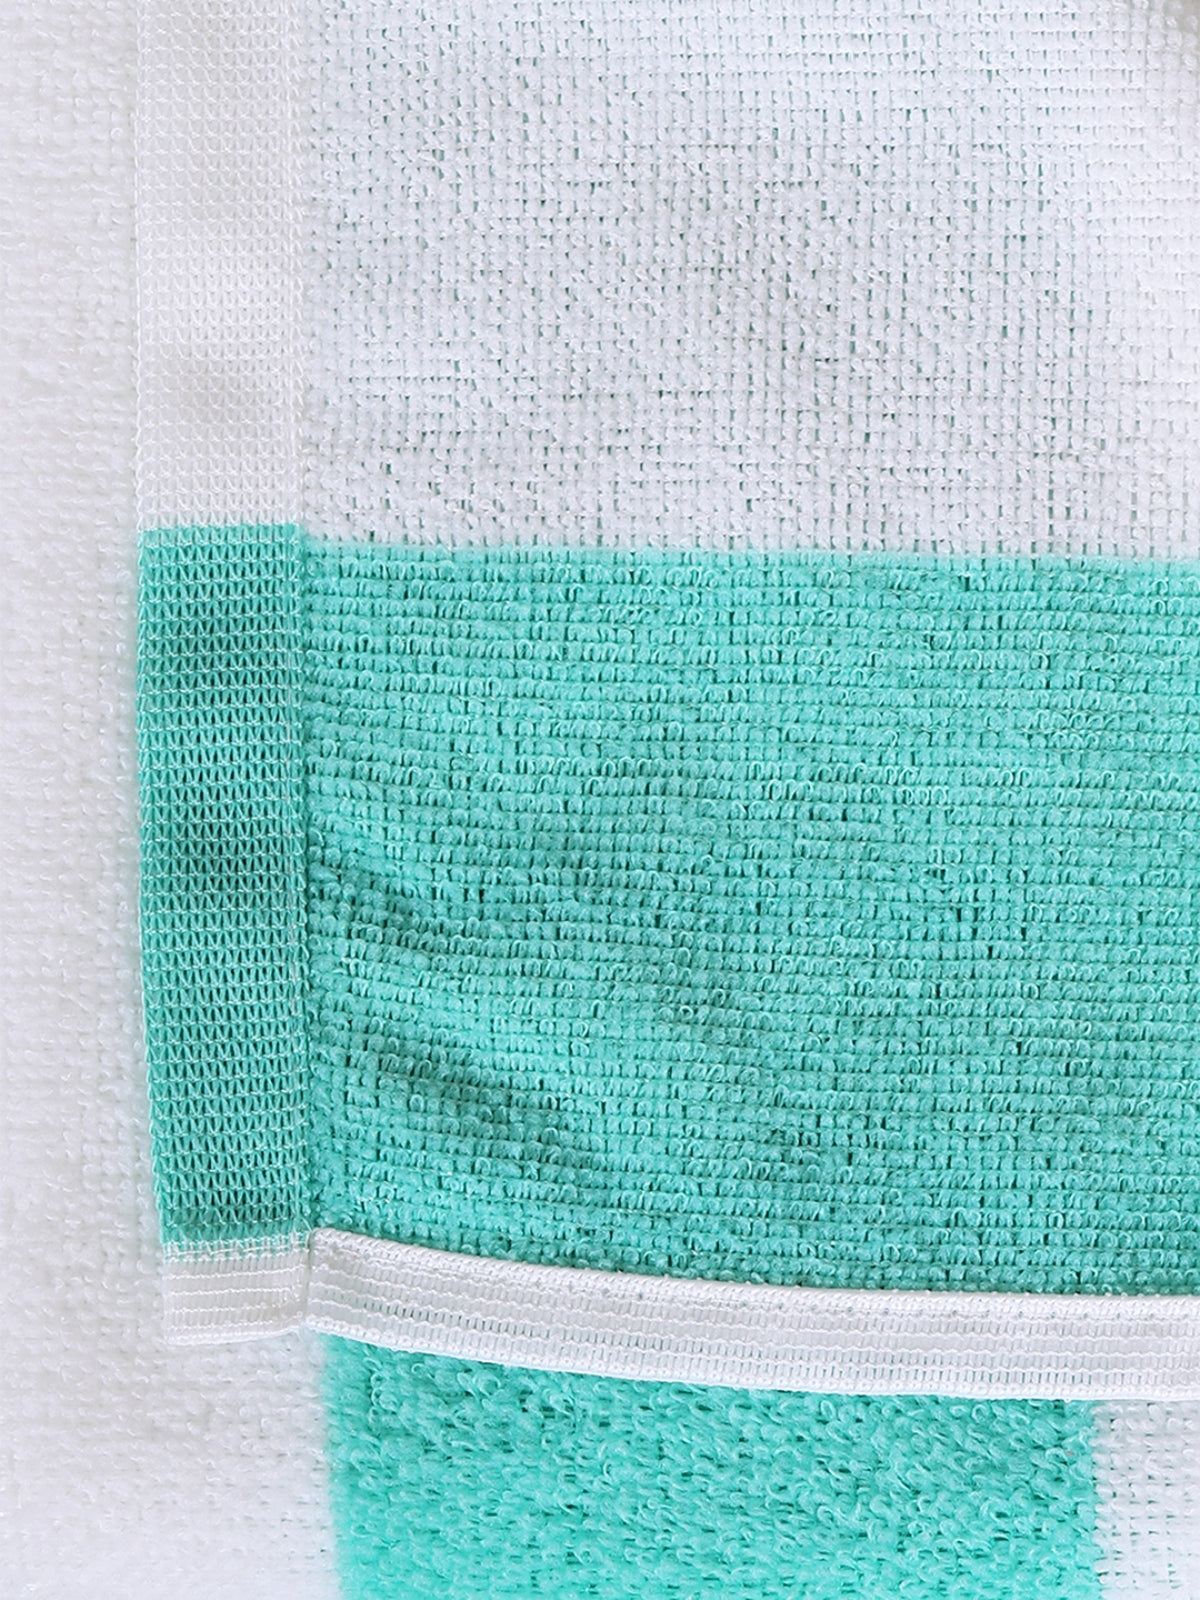 Set of 2 Green & White Stripes Microfiber Towels